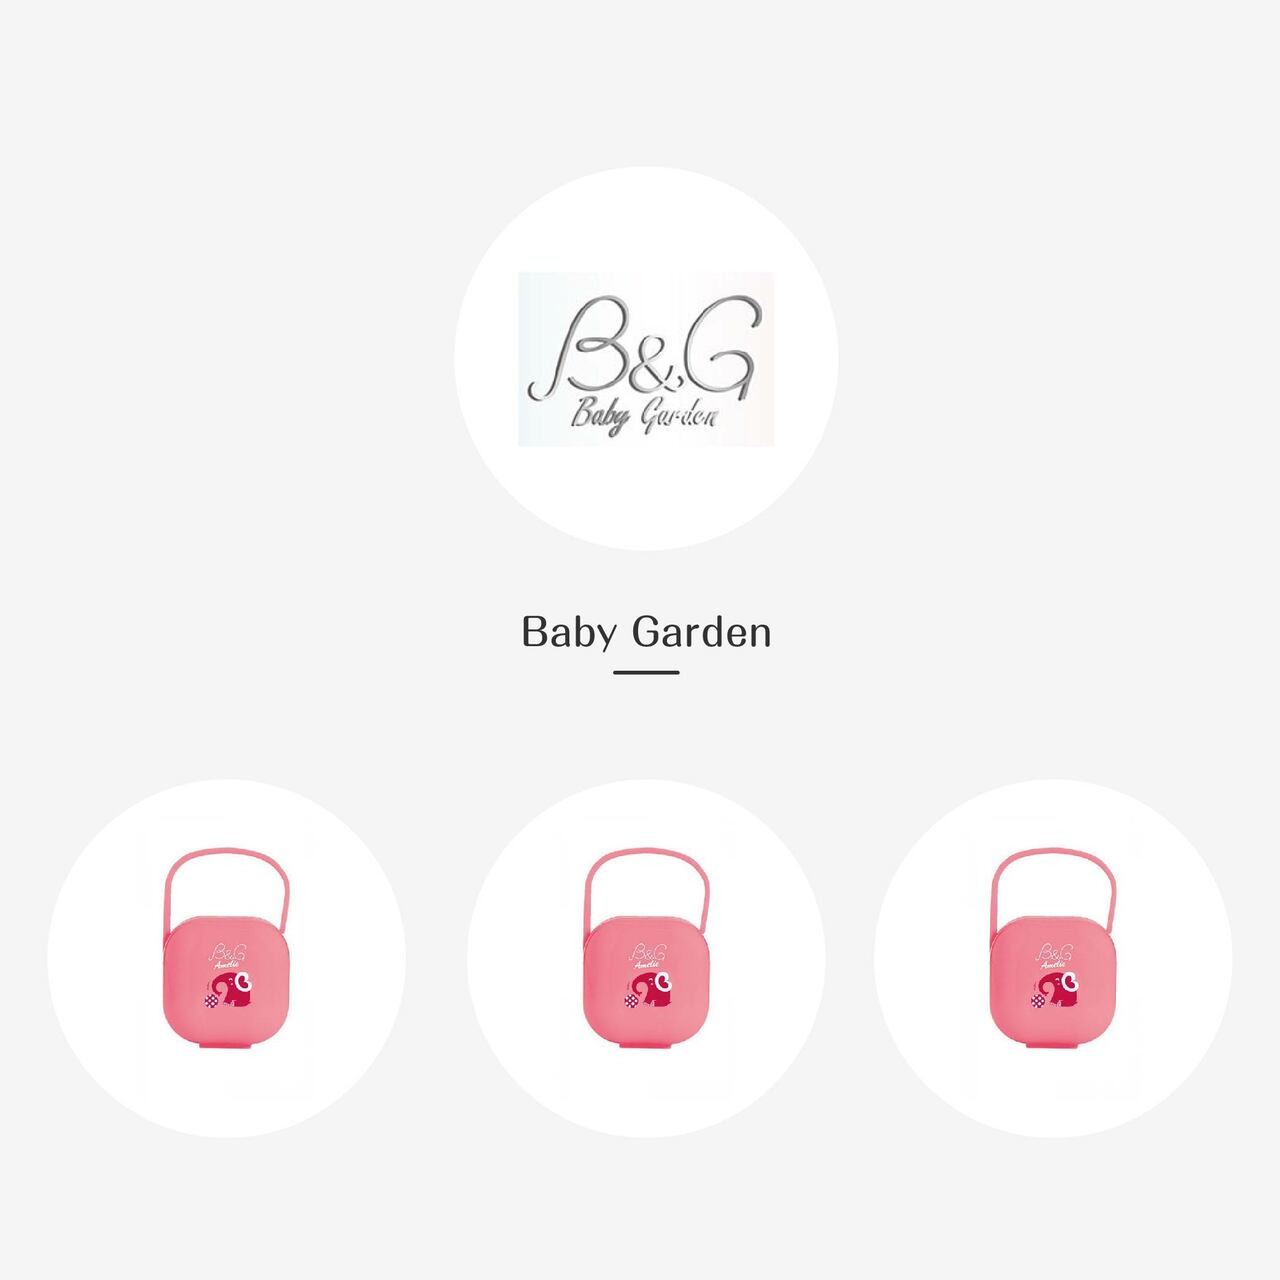 Baby Garden